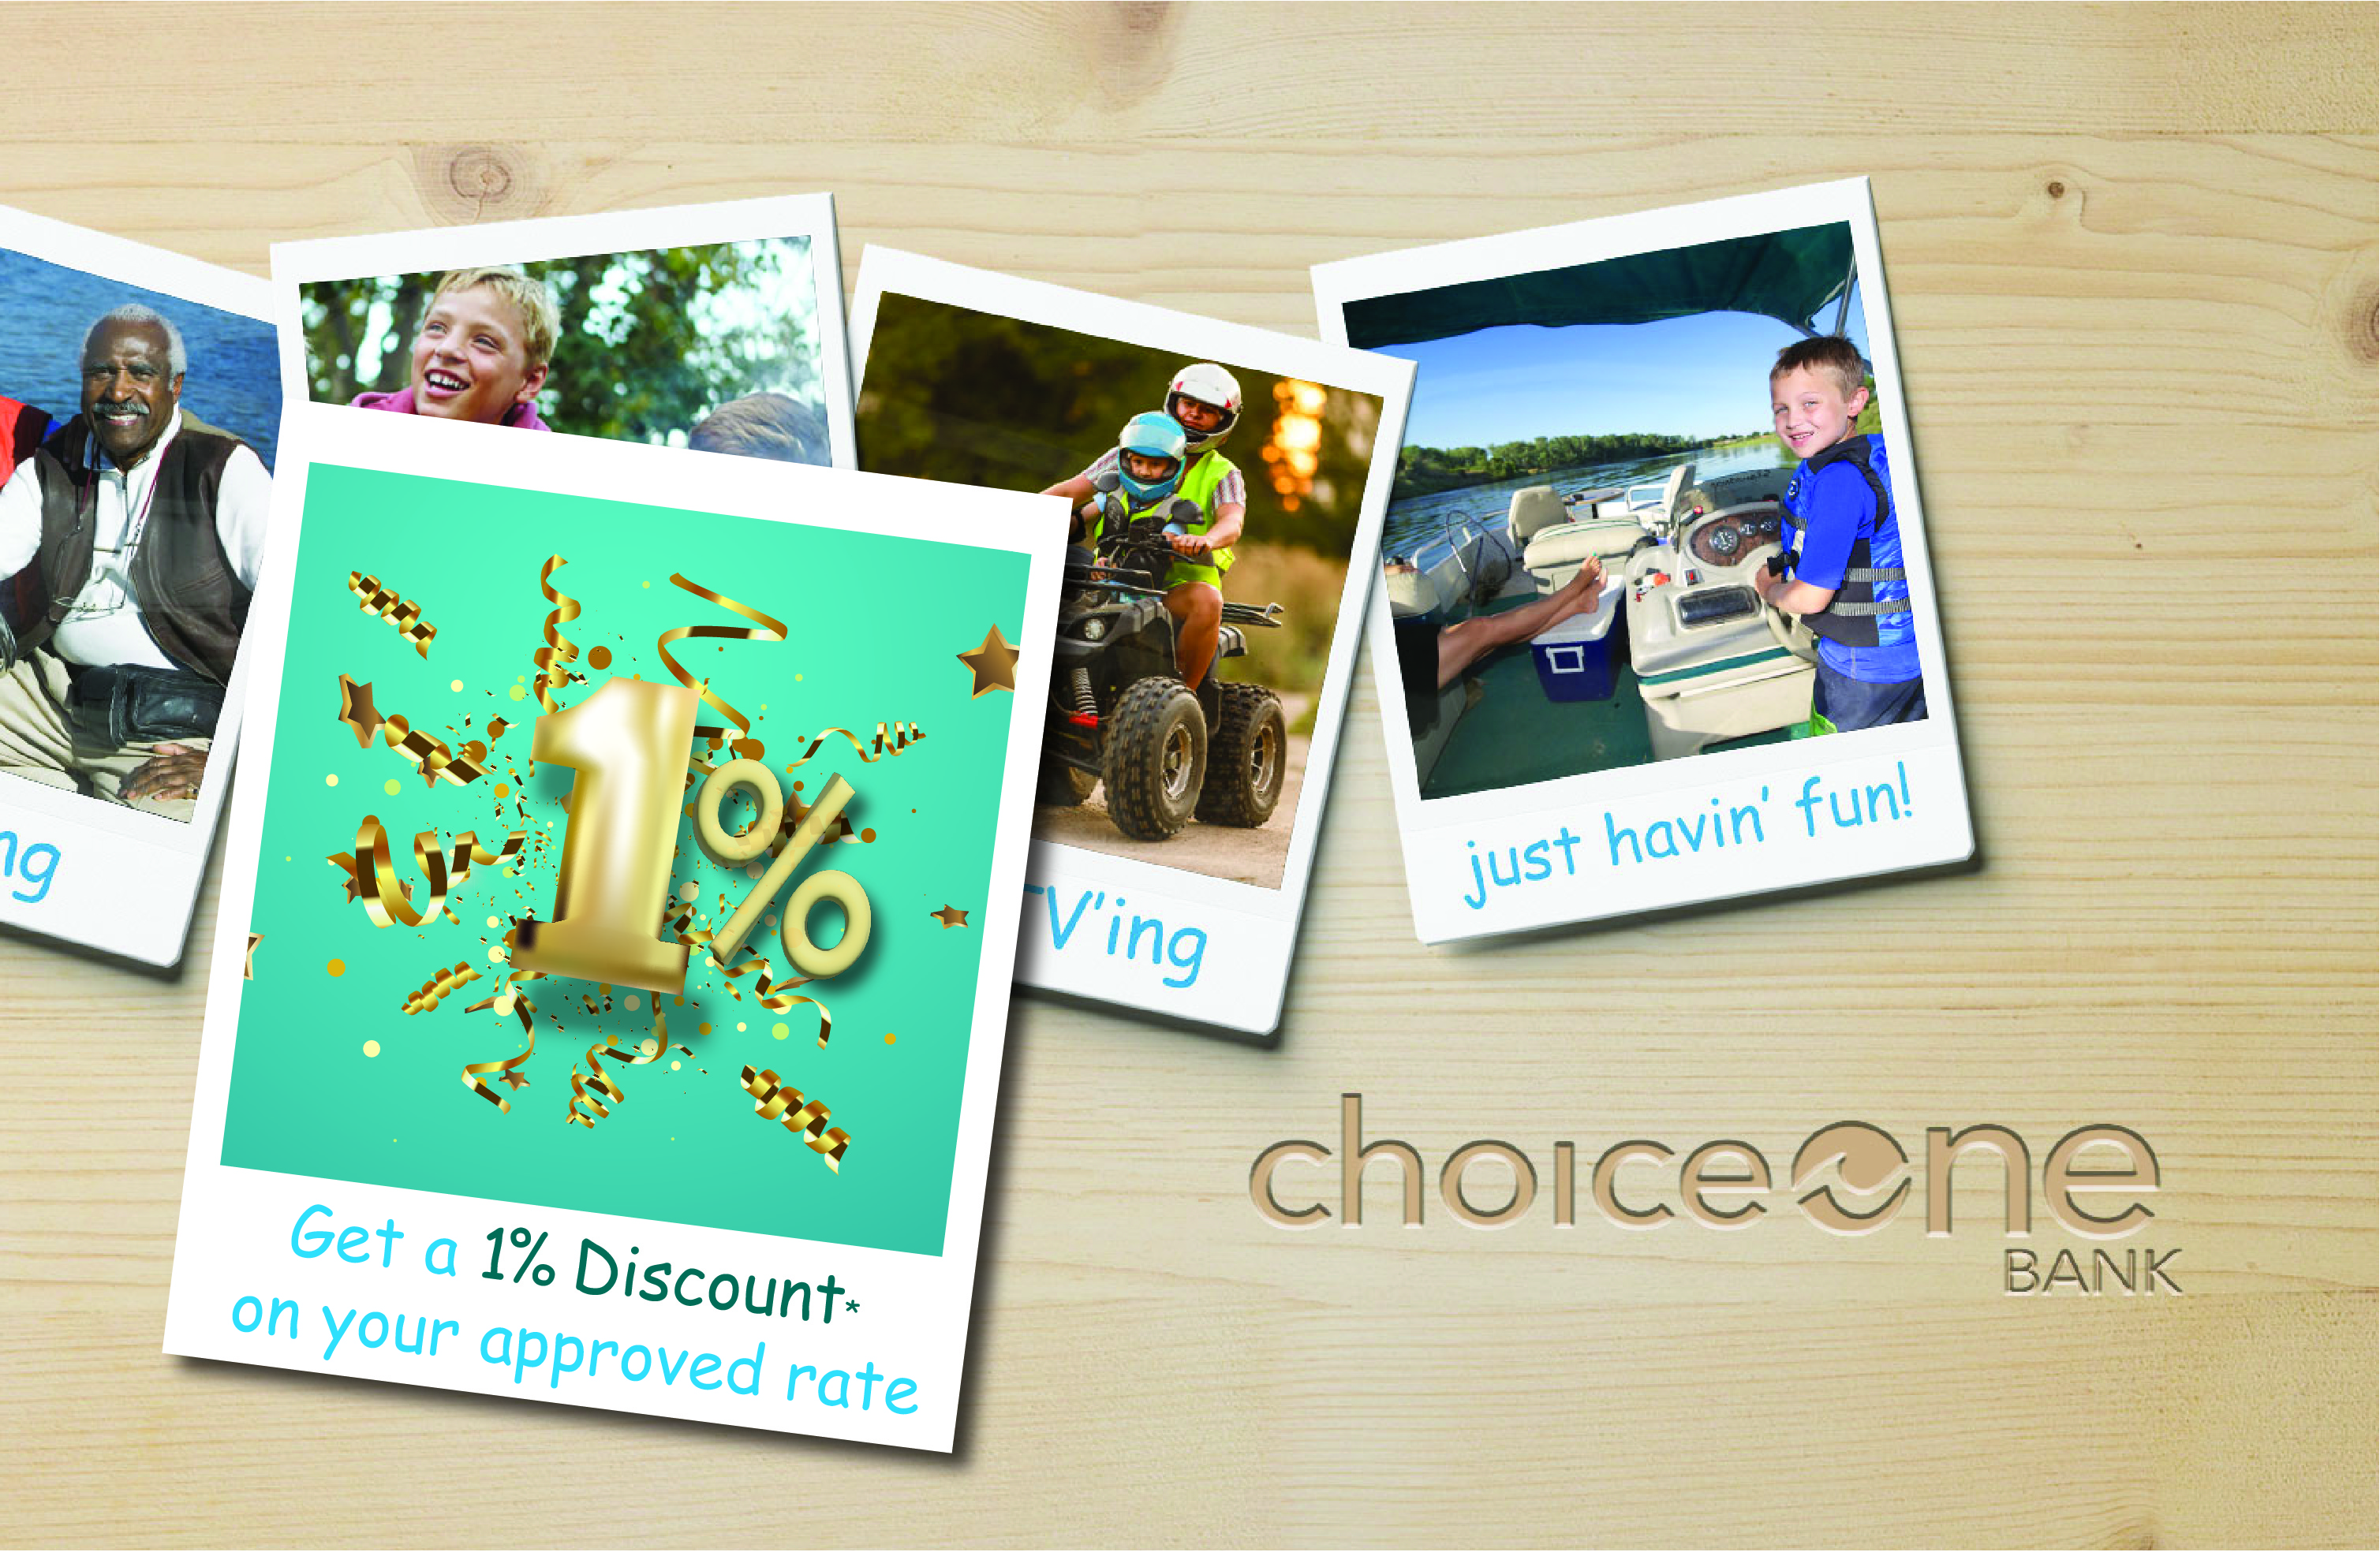 ChoiceOne Bank polaroid photos of loan special